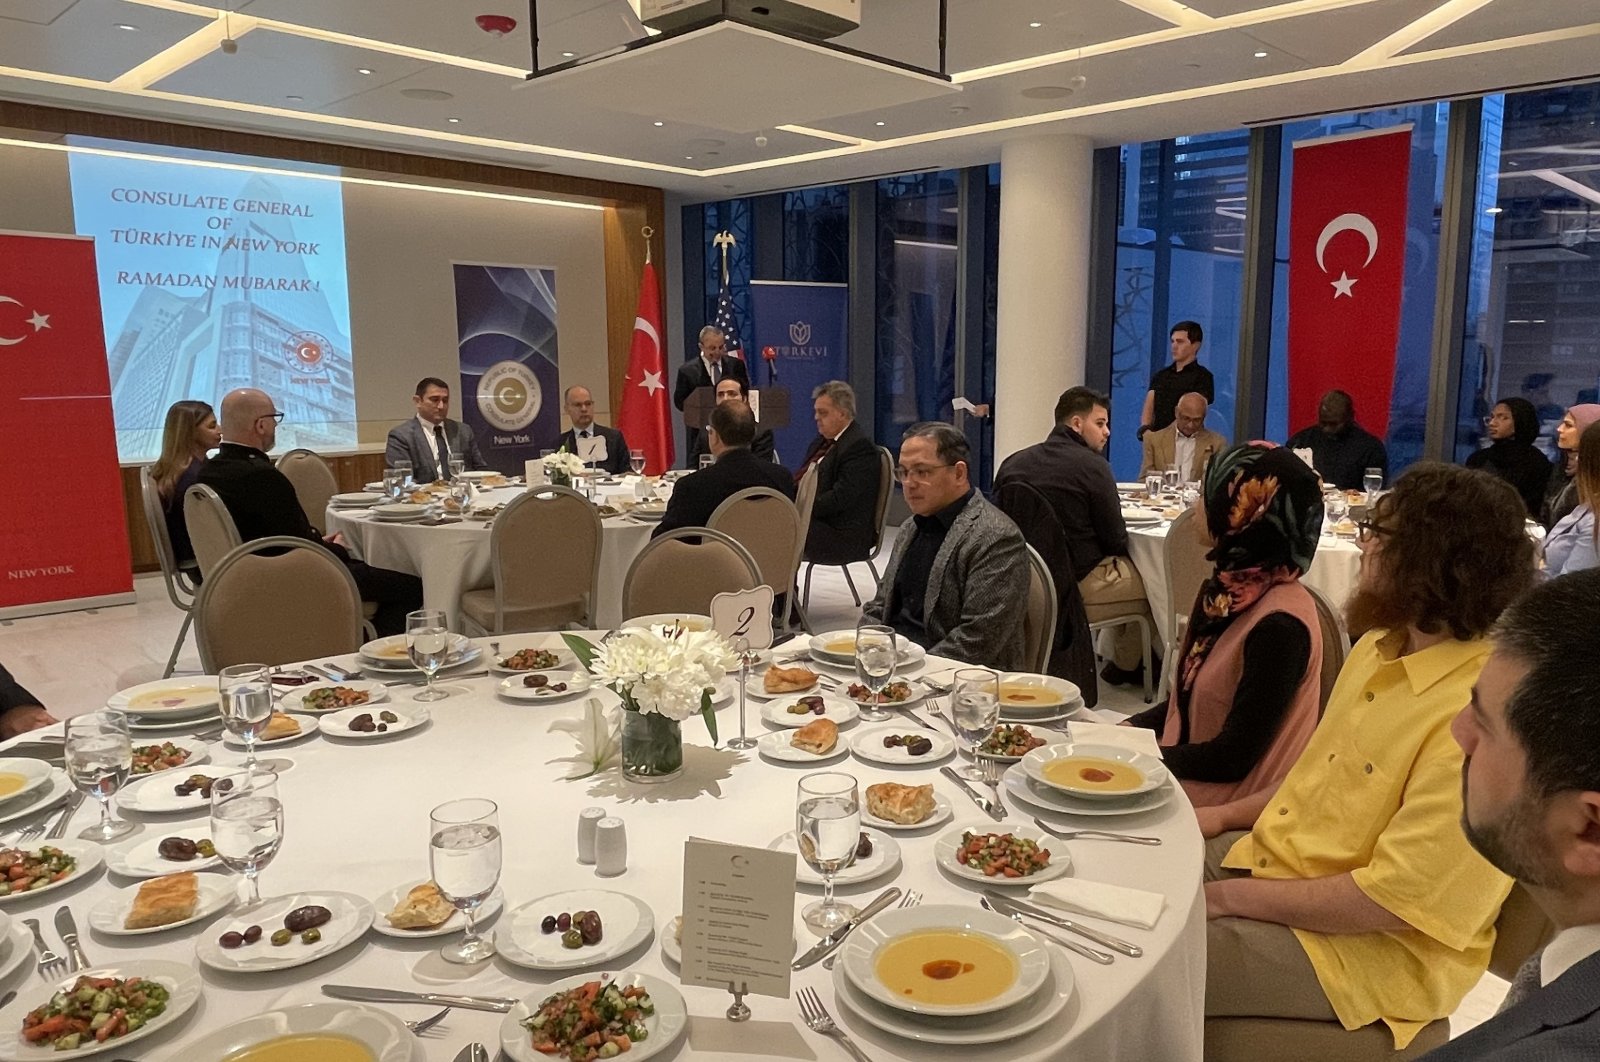 Rumah Turki di New York menyelenggarakan buka puasa Ramadhan pertama